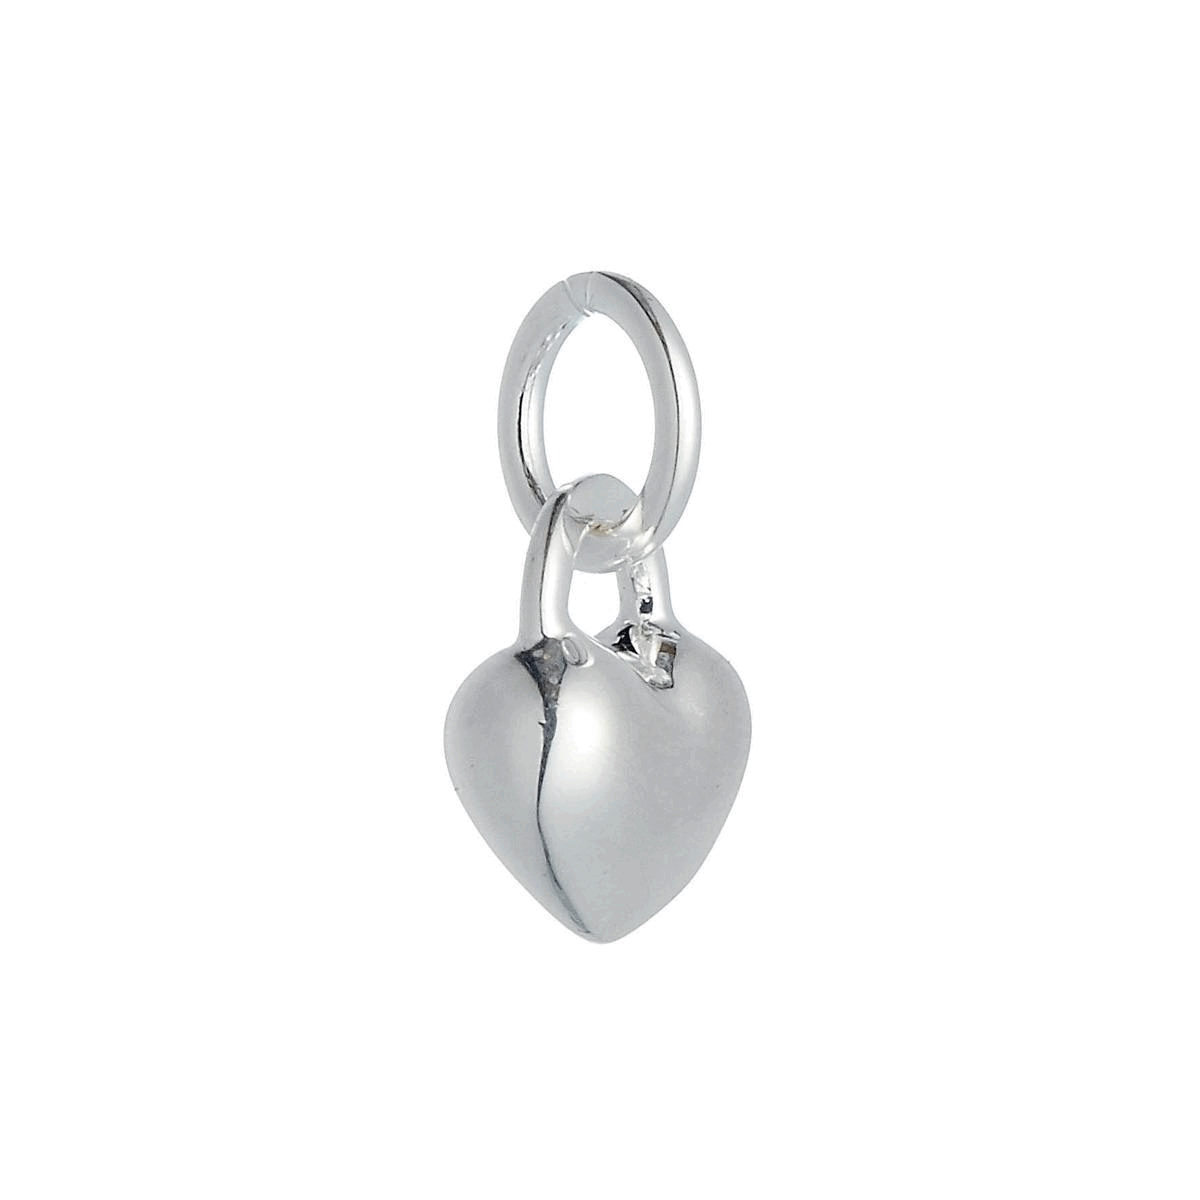 solid silver love heart bracelet necklace charm pendant